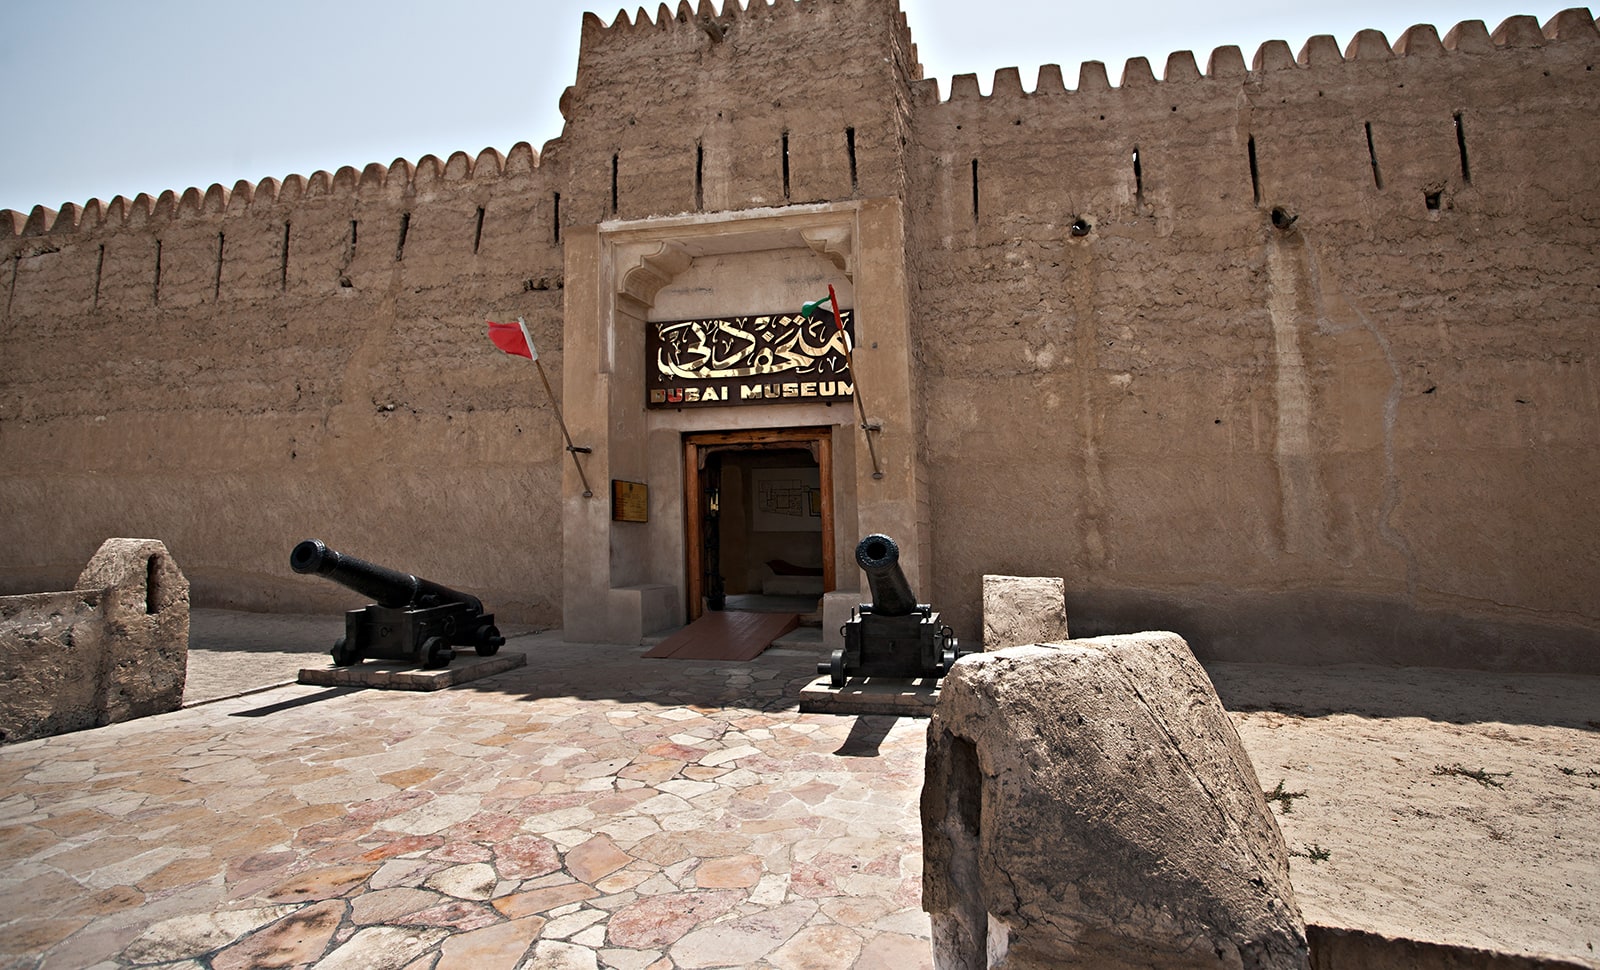 Al-Fahidi-Fort